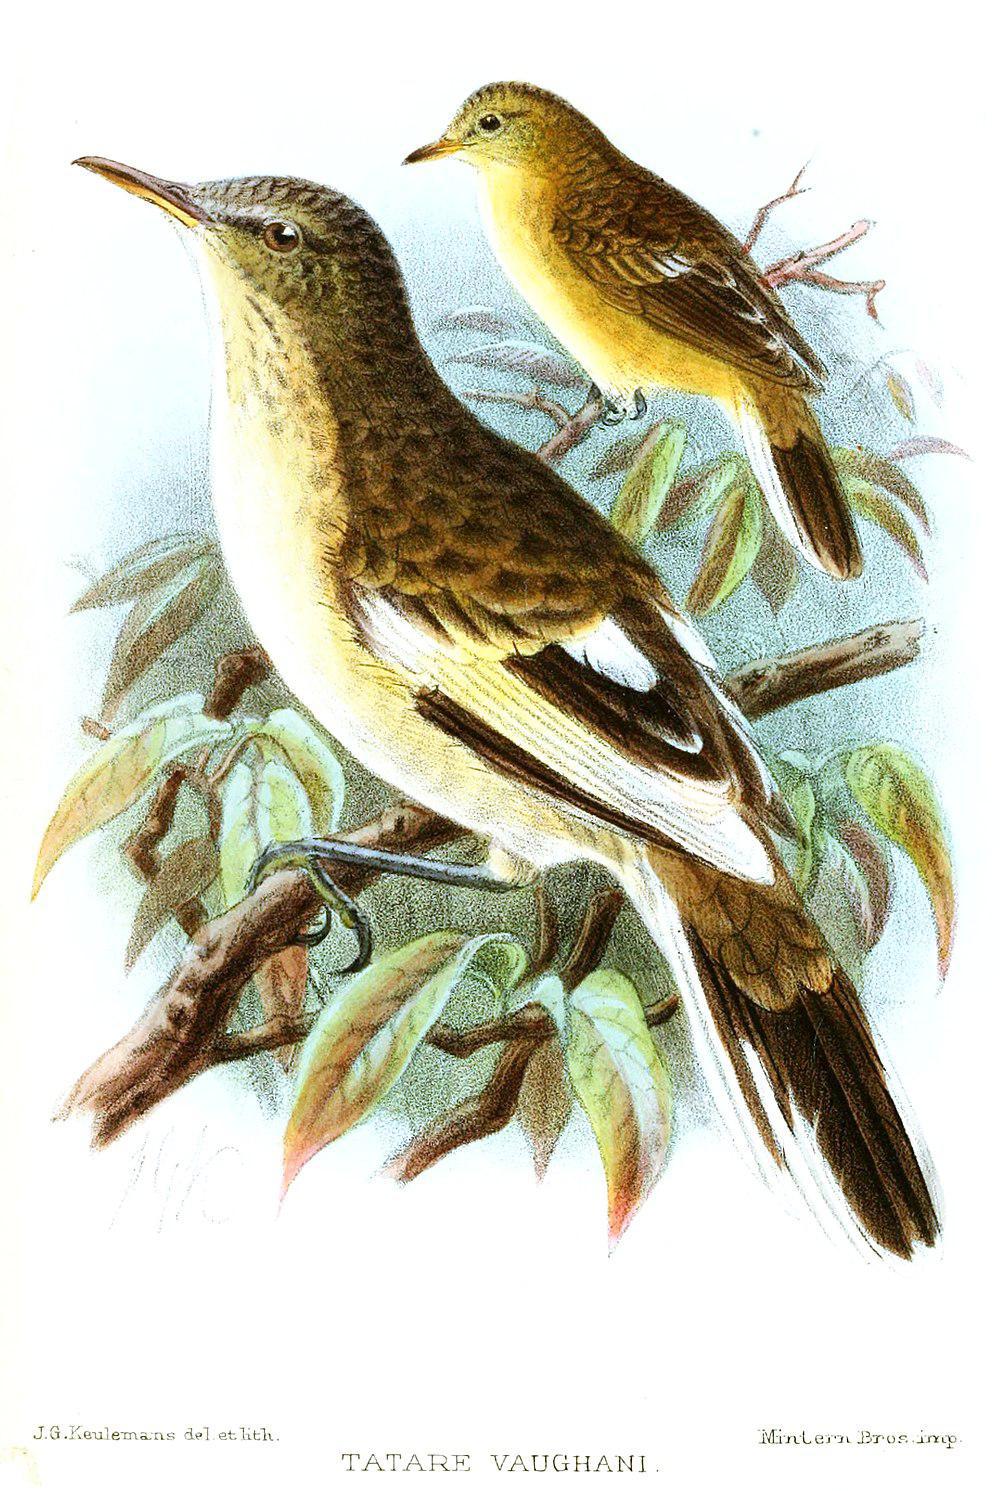 皮岛苇莺 / Pitcairn Reed Warbler / Acrocephalus vaughani